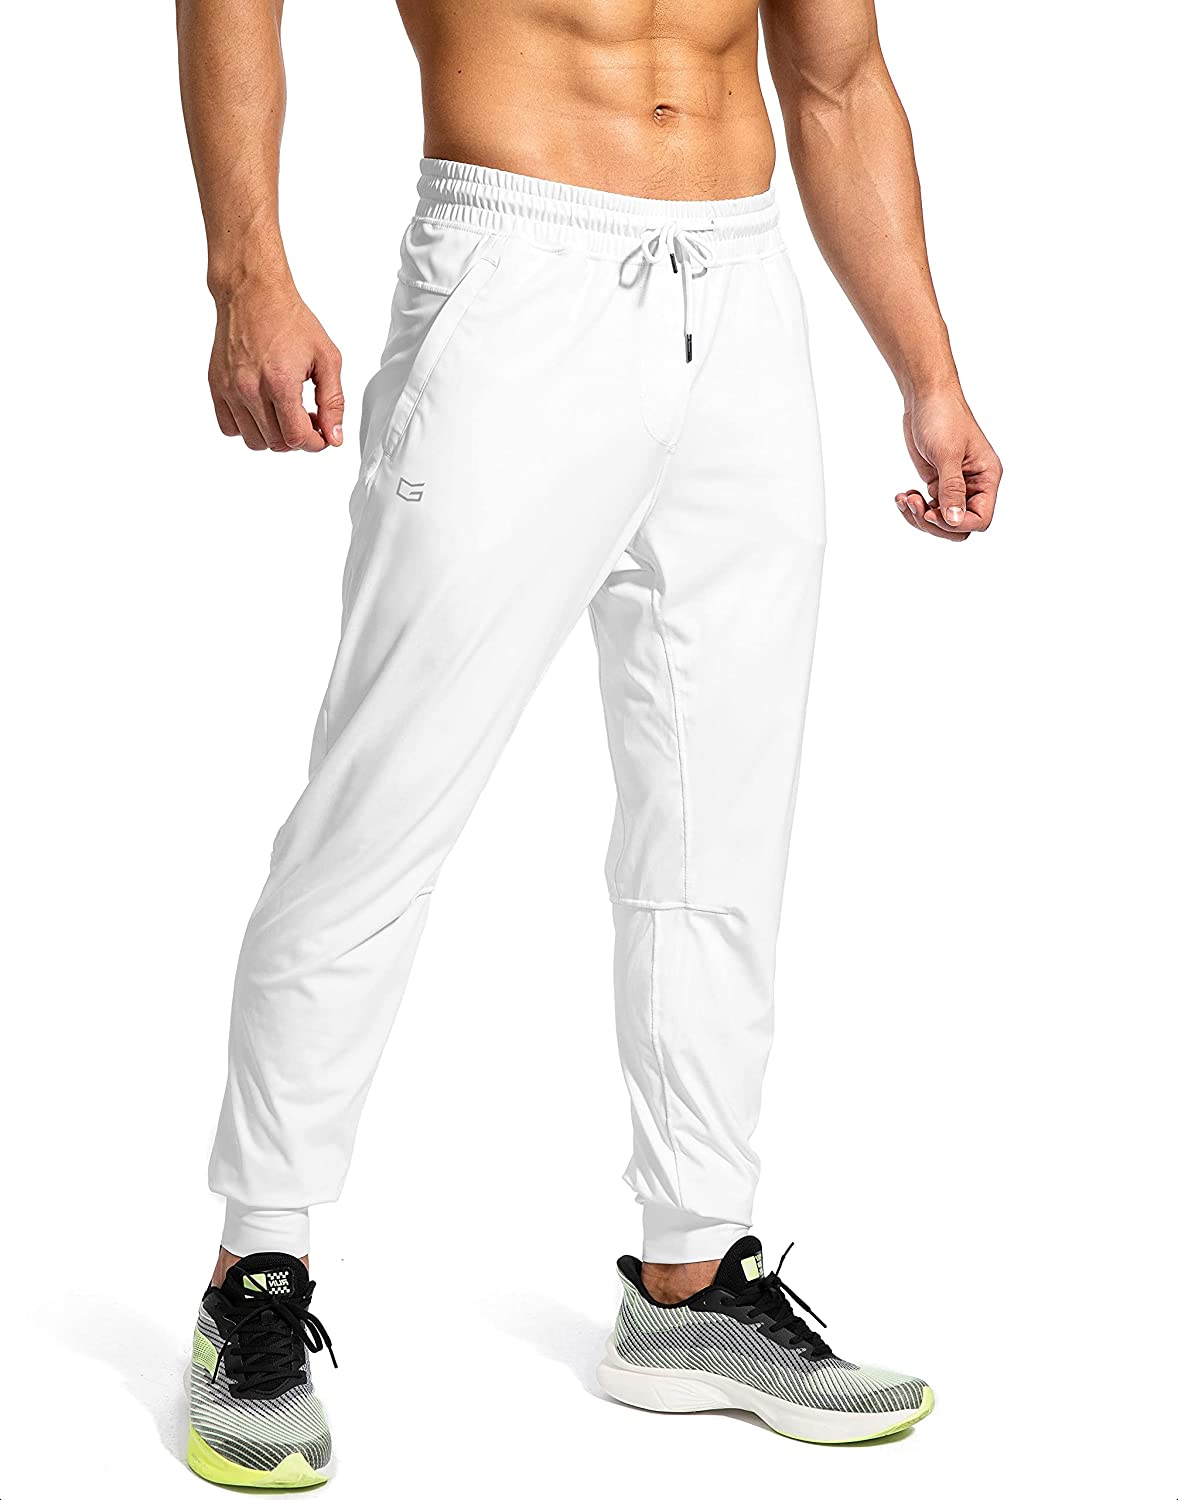 Jogging G Gradual Men's Sweatpants with Zipper Pockets Open Bottom Athletic Pants for Men Workout Lounge Running 